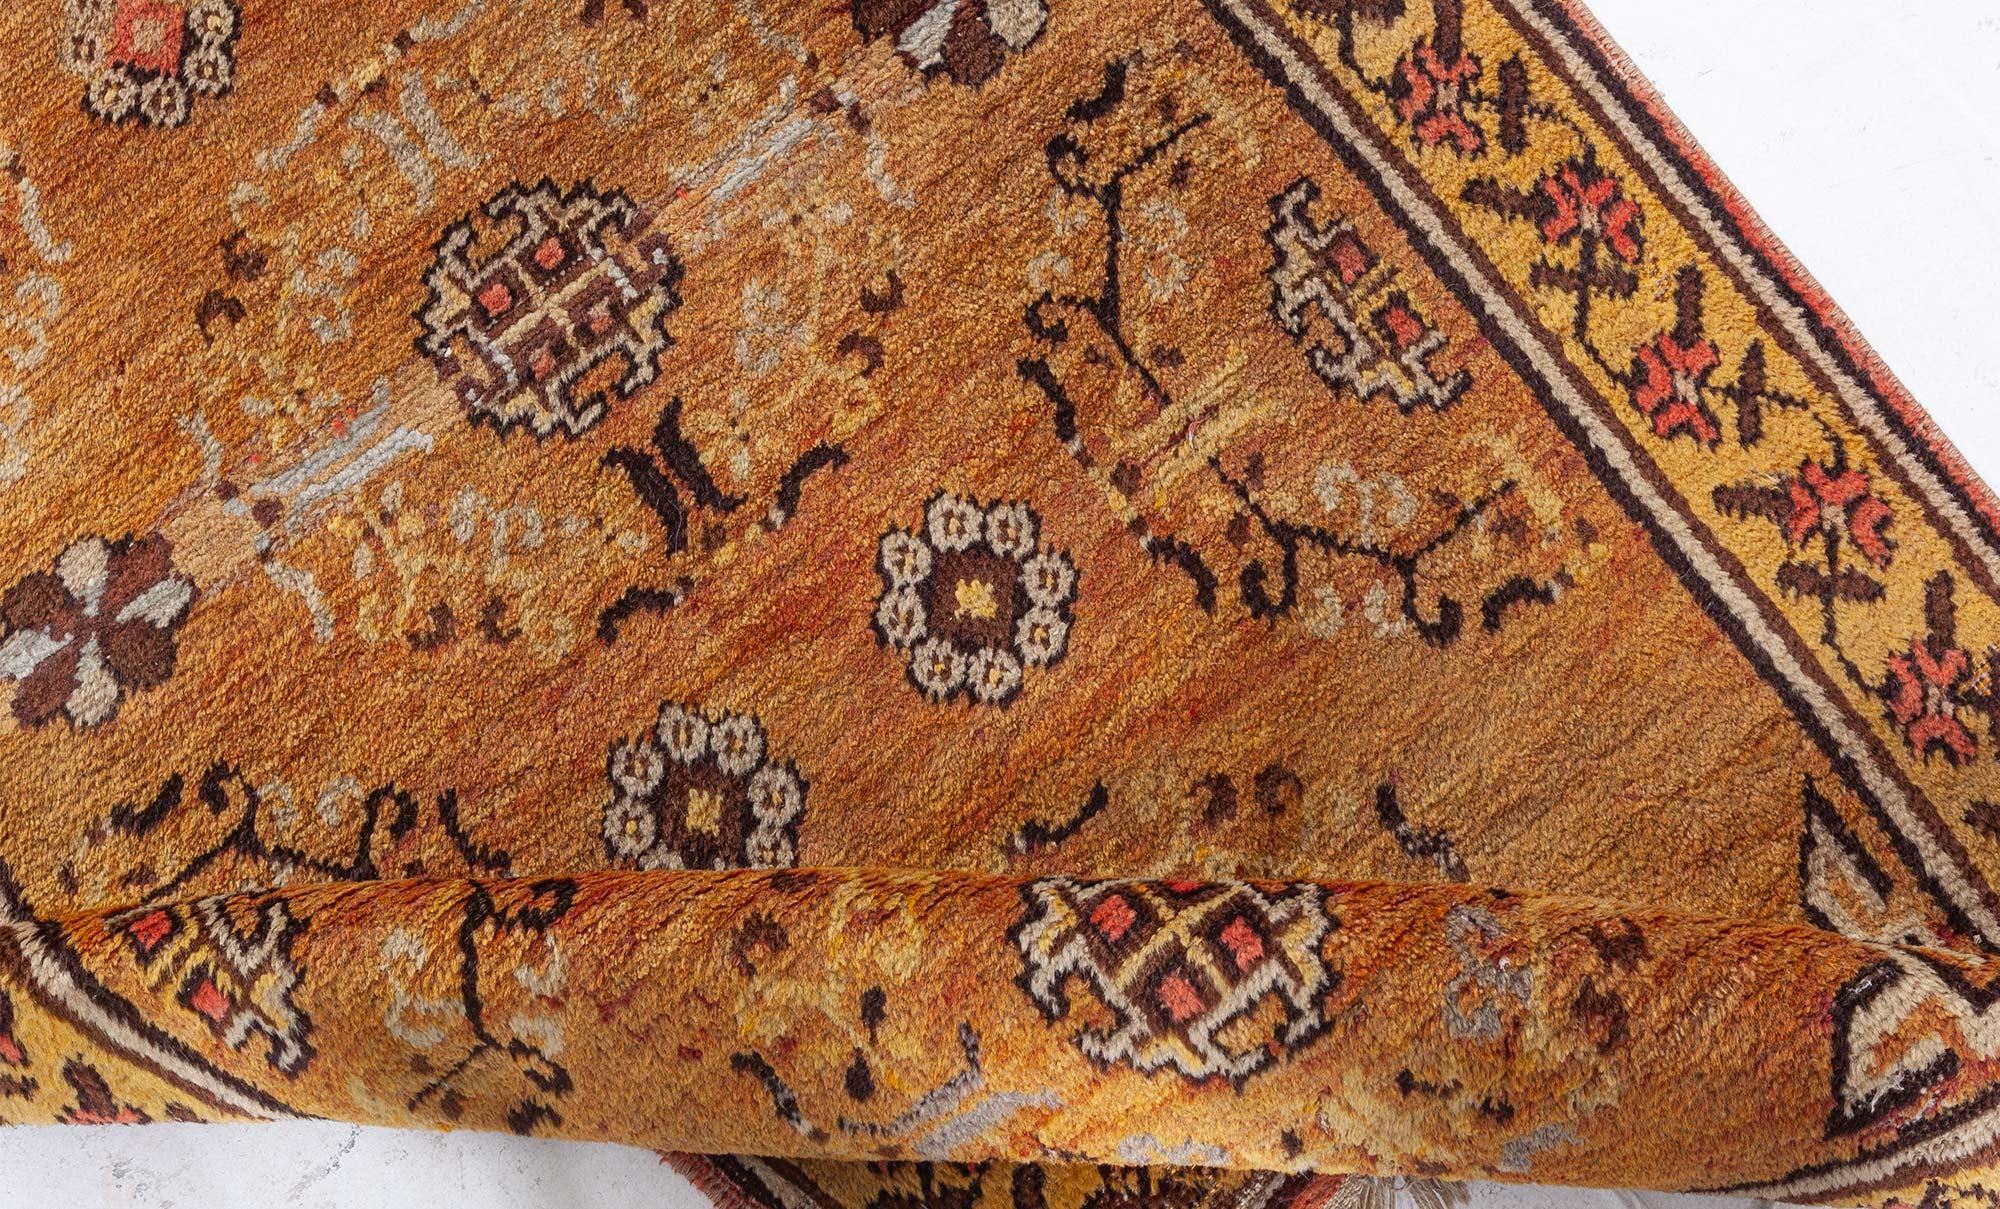 Vintage Samarkand (Khotan) golden yellow rug.
Size: 2'3